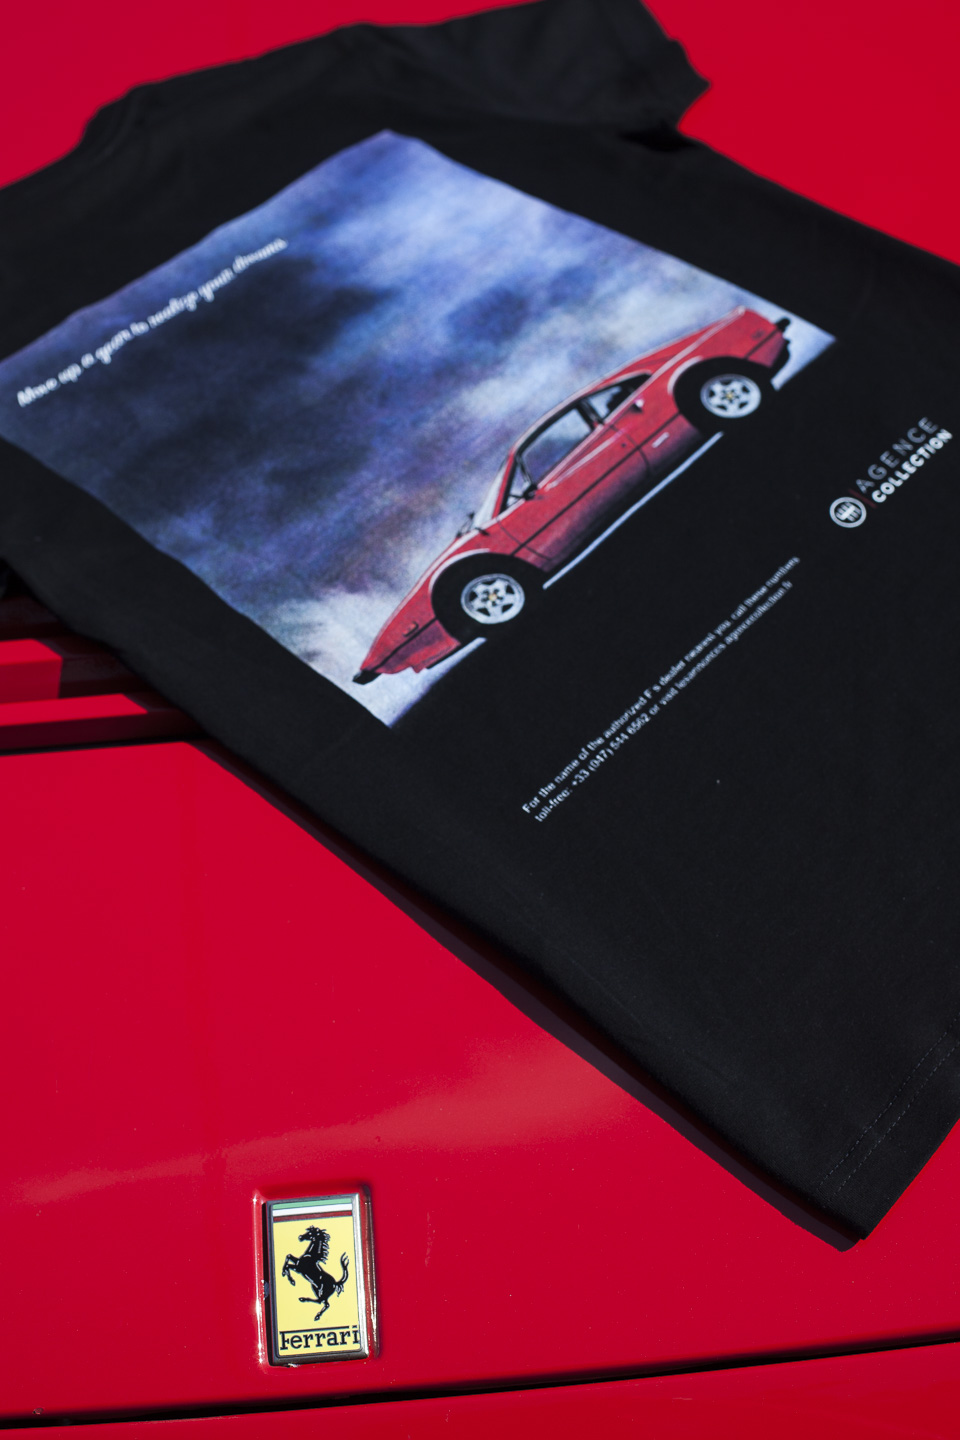 Agence Collection Ferrari 308 GTB Vintage Ad T-Shirt